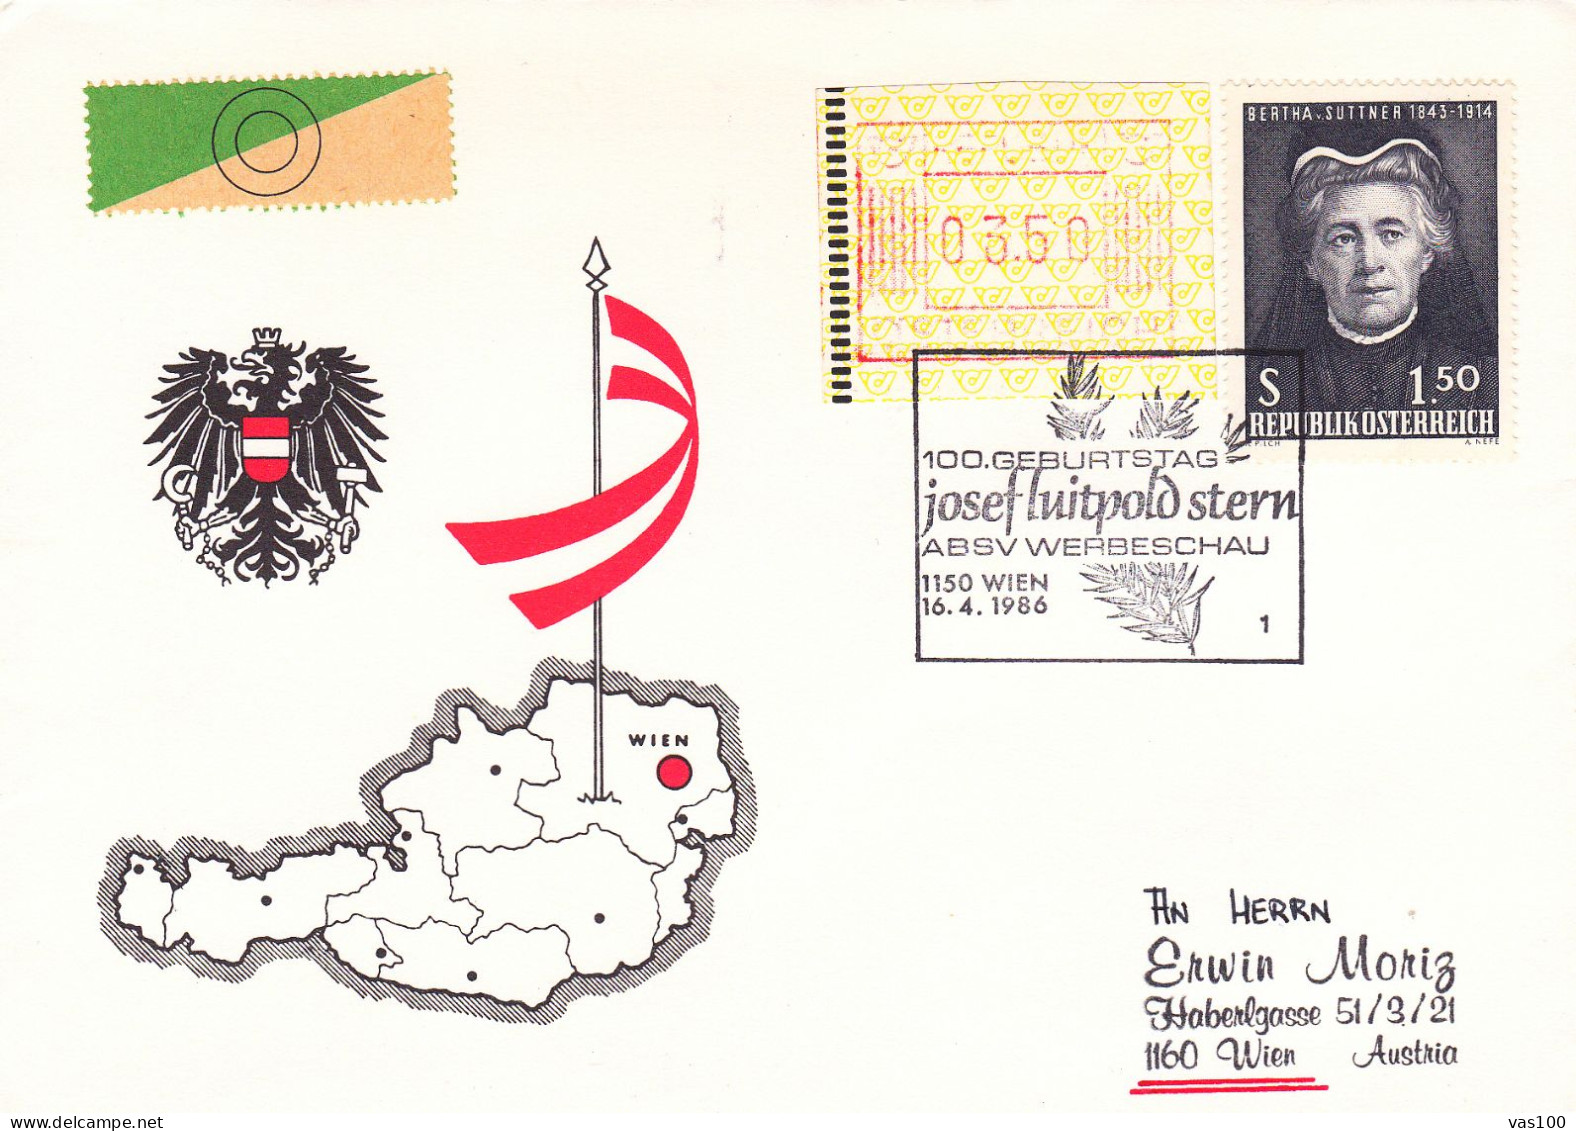 AUSTRIA POSTAL HISTORY / ABSV WERBESCHAU, 16.04.1986 - Storia Postale